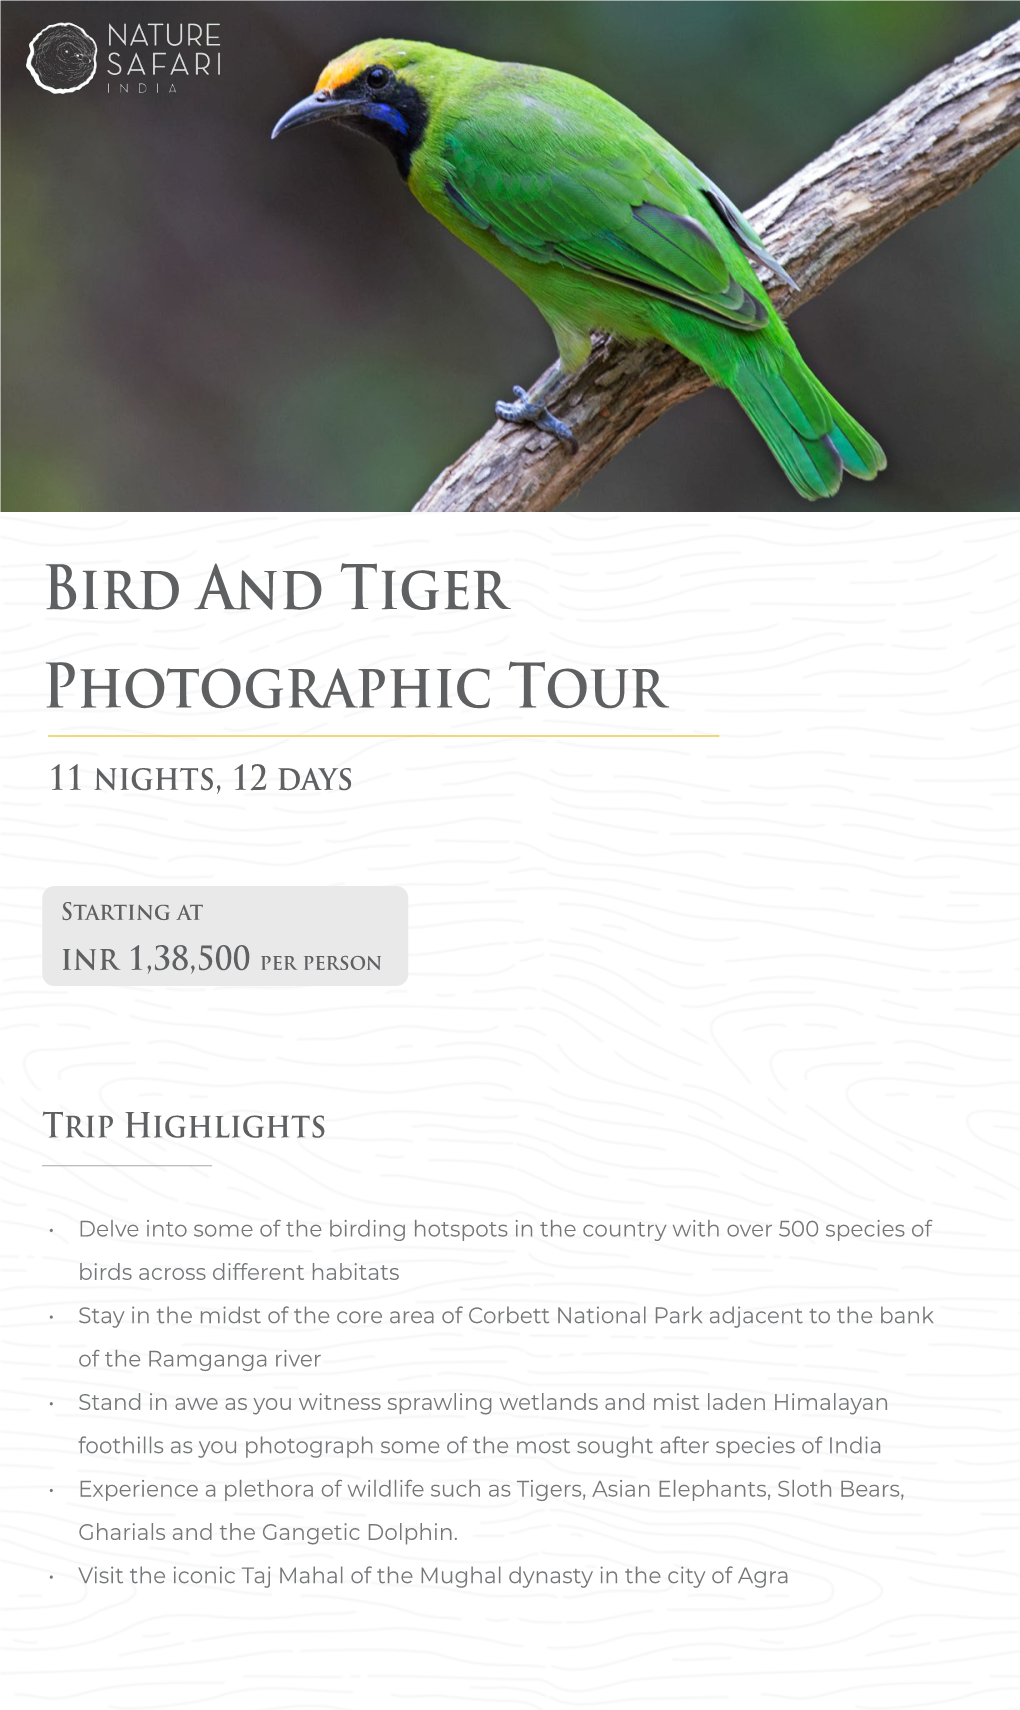 Bird and Tiger Photographic Tour